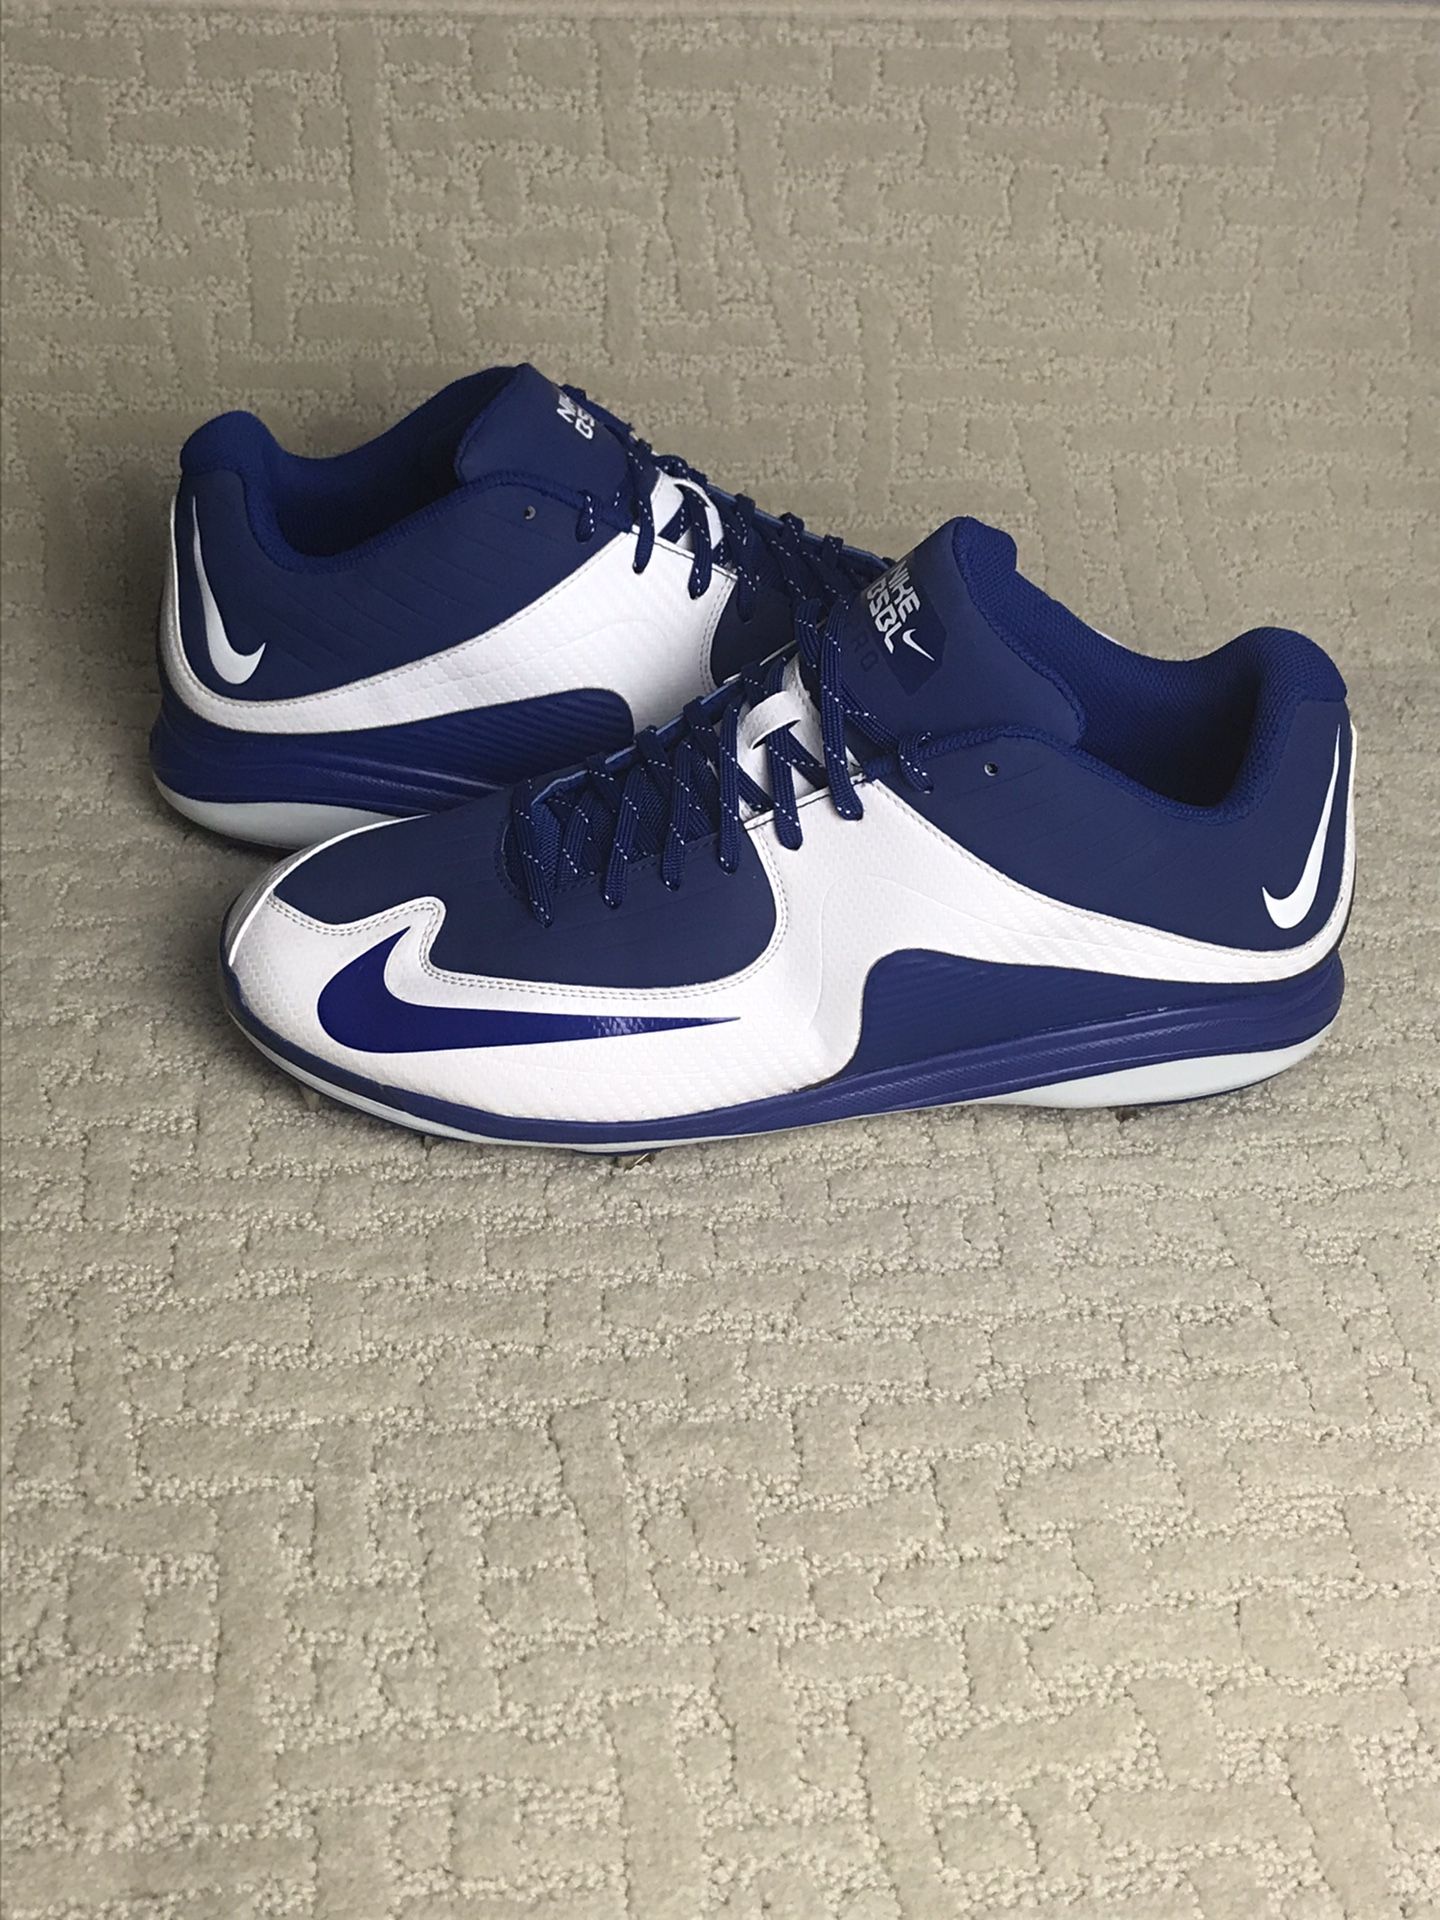 Nike MVP Baseball Cleats Blue White New Metal 684685-411 Men's Size 15 (no box)